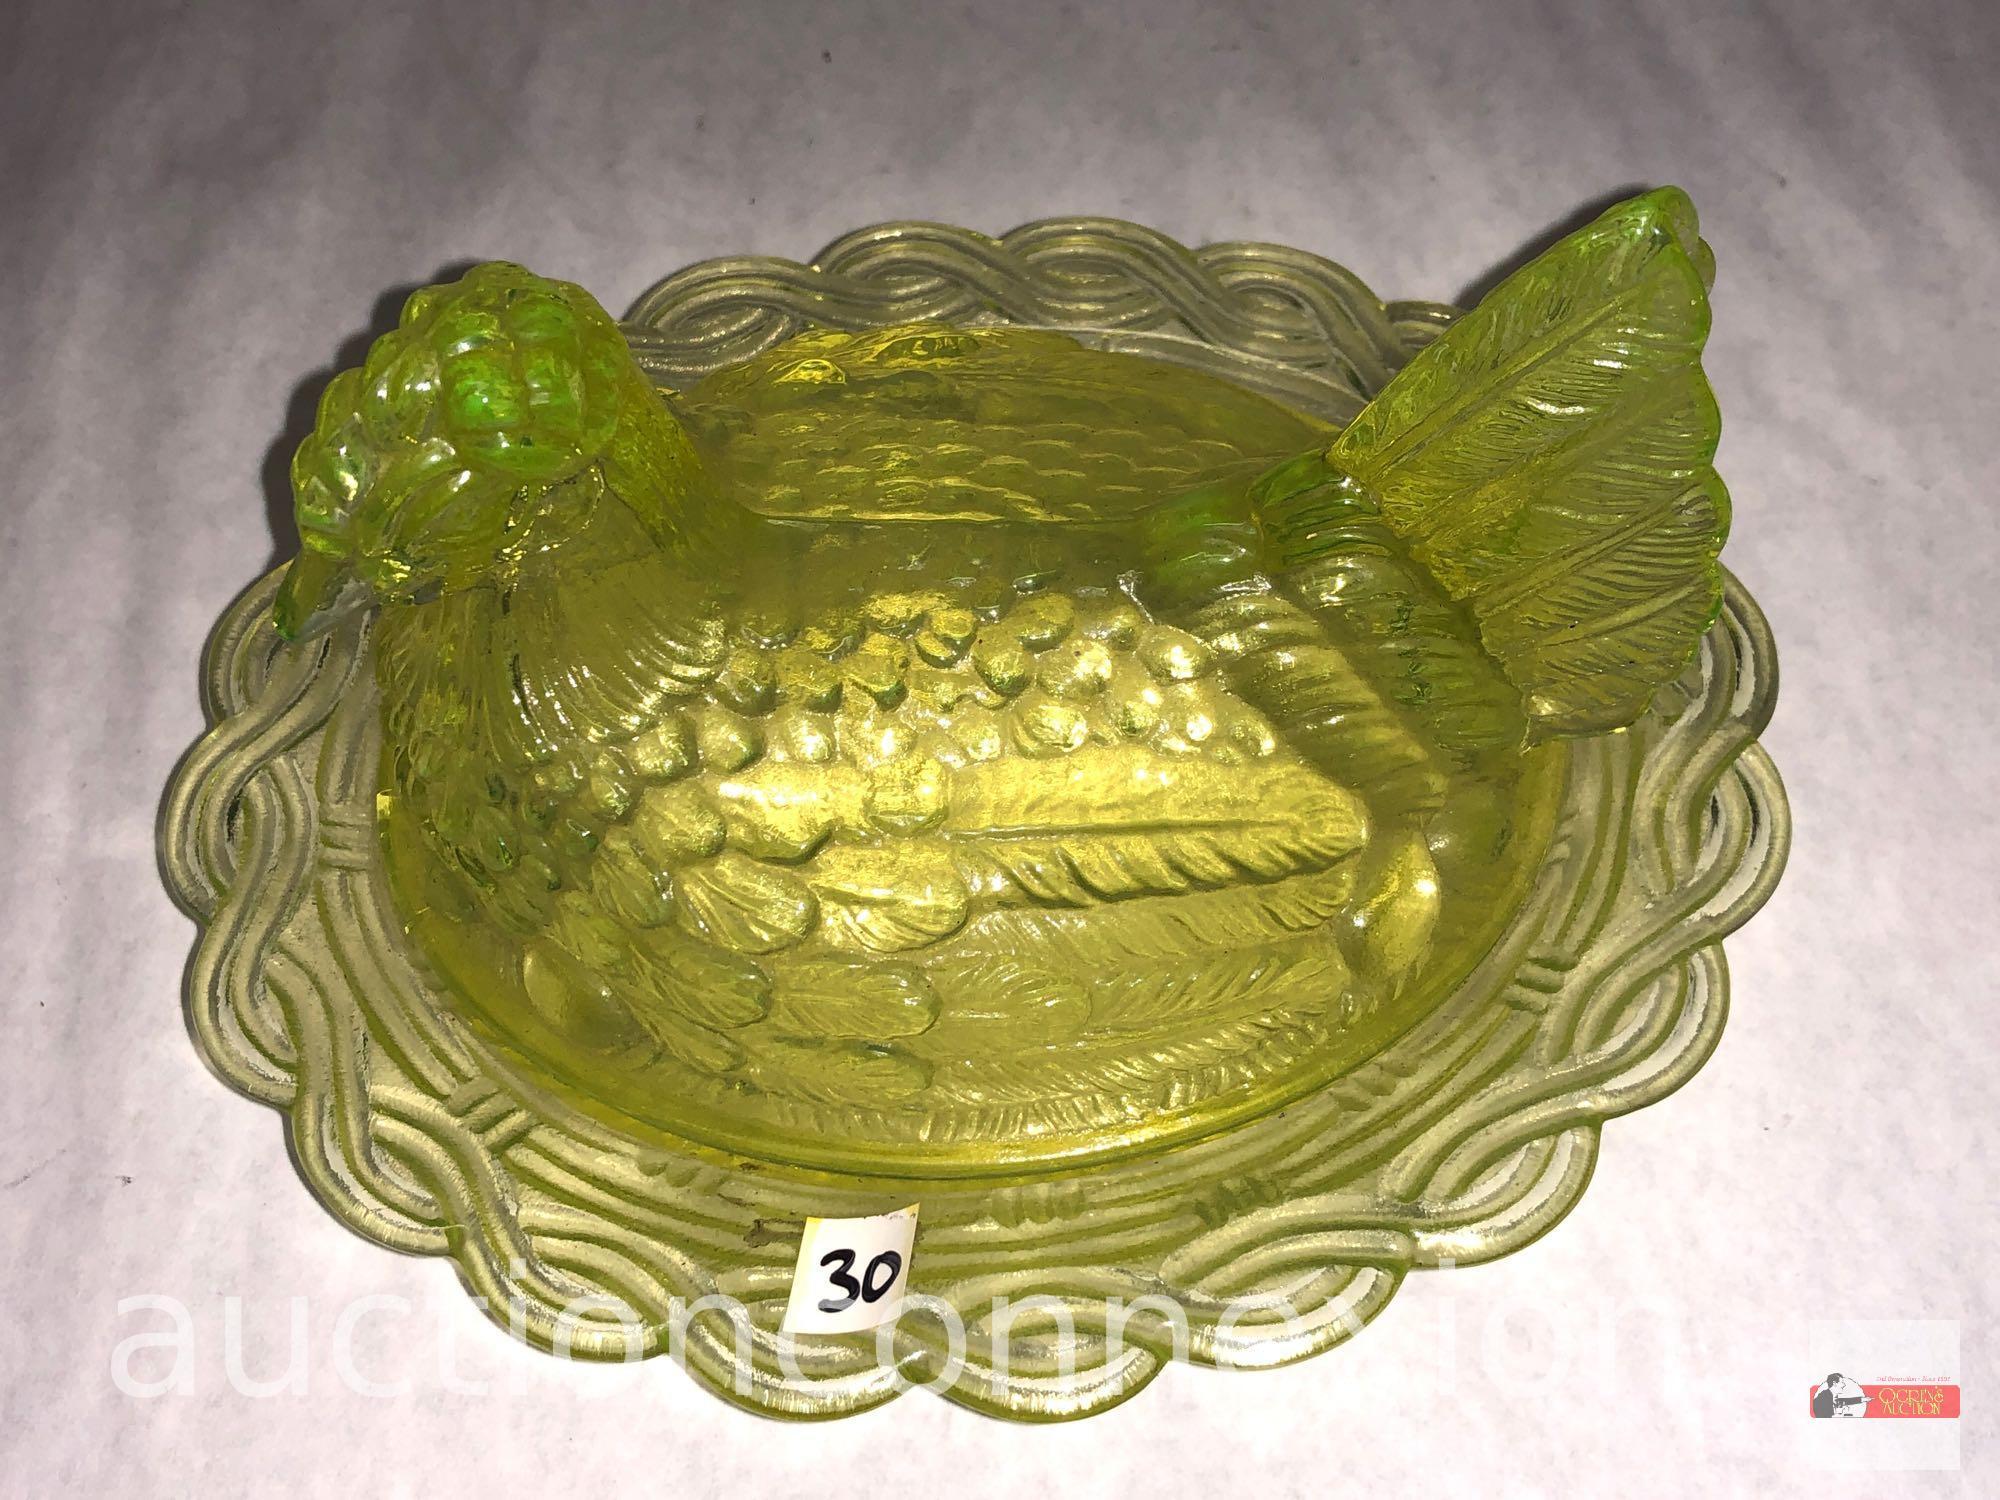 Glassware - Yellow Vaseline glass??? chicken in a basket dish